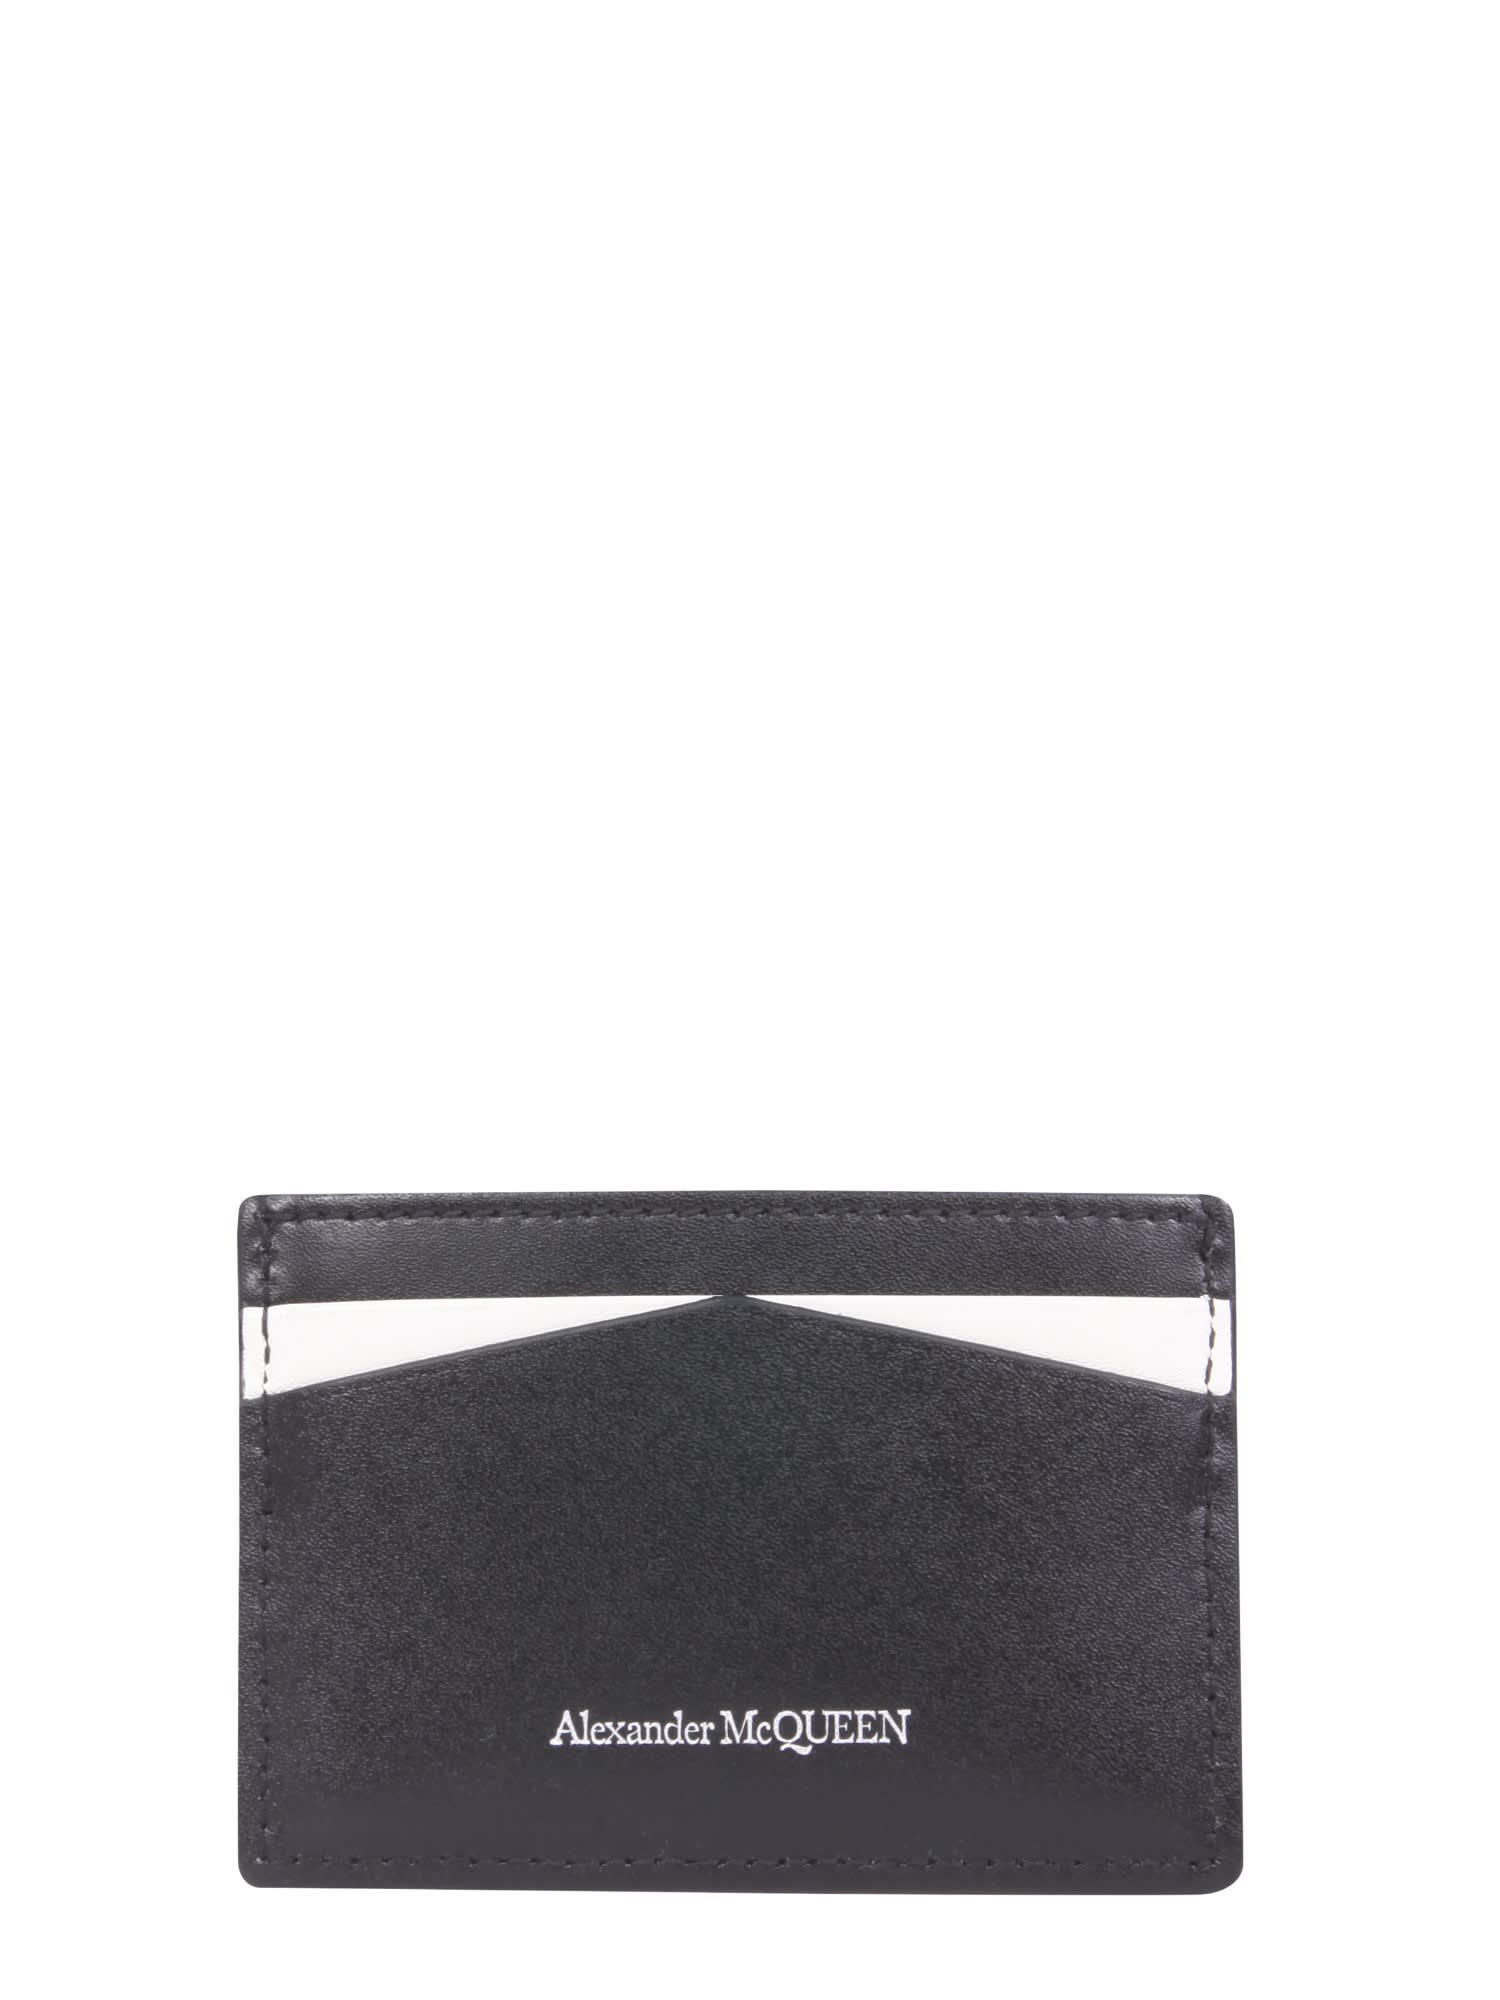 Alexander McQueen Leather Card Holder